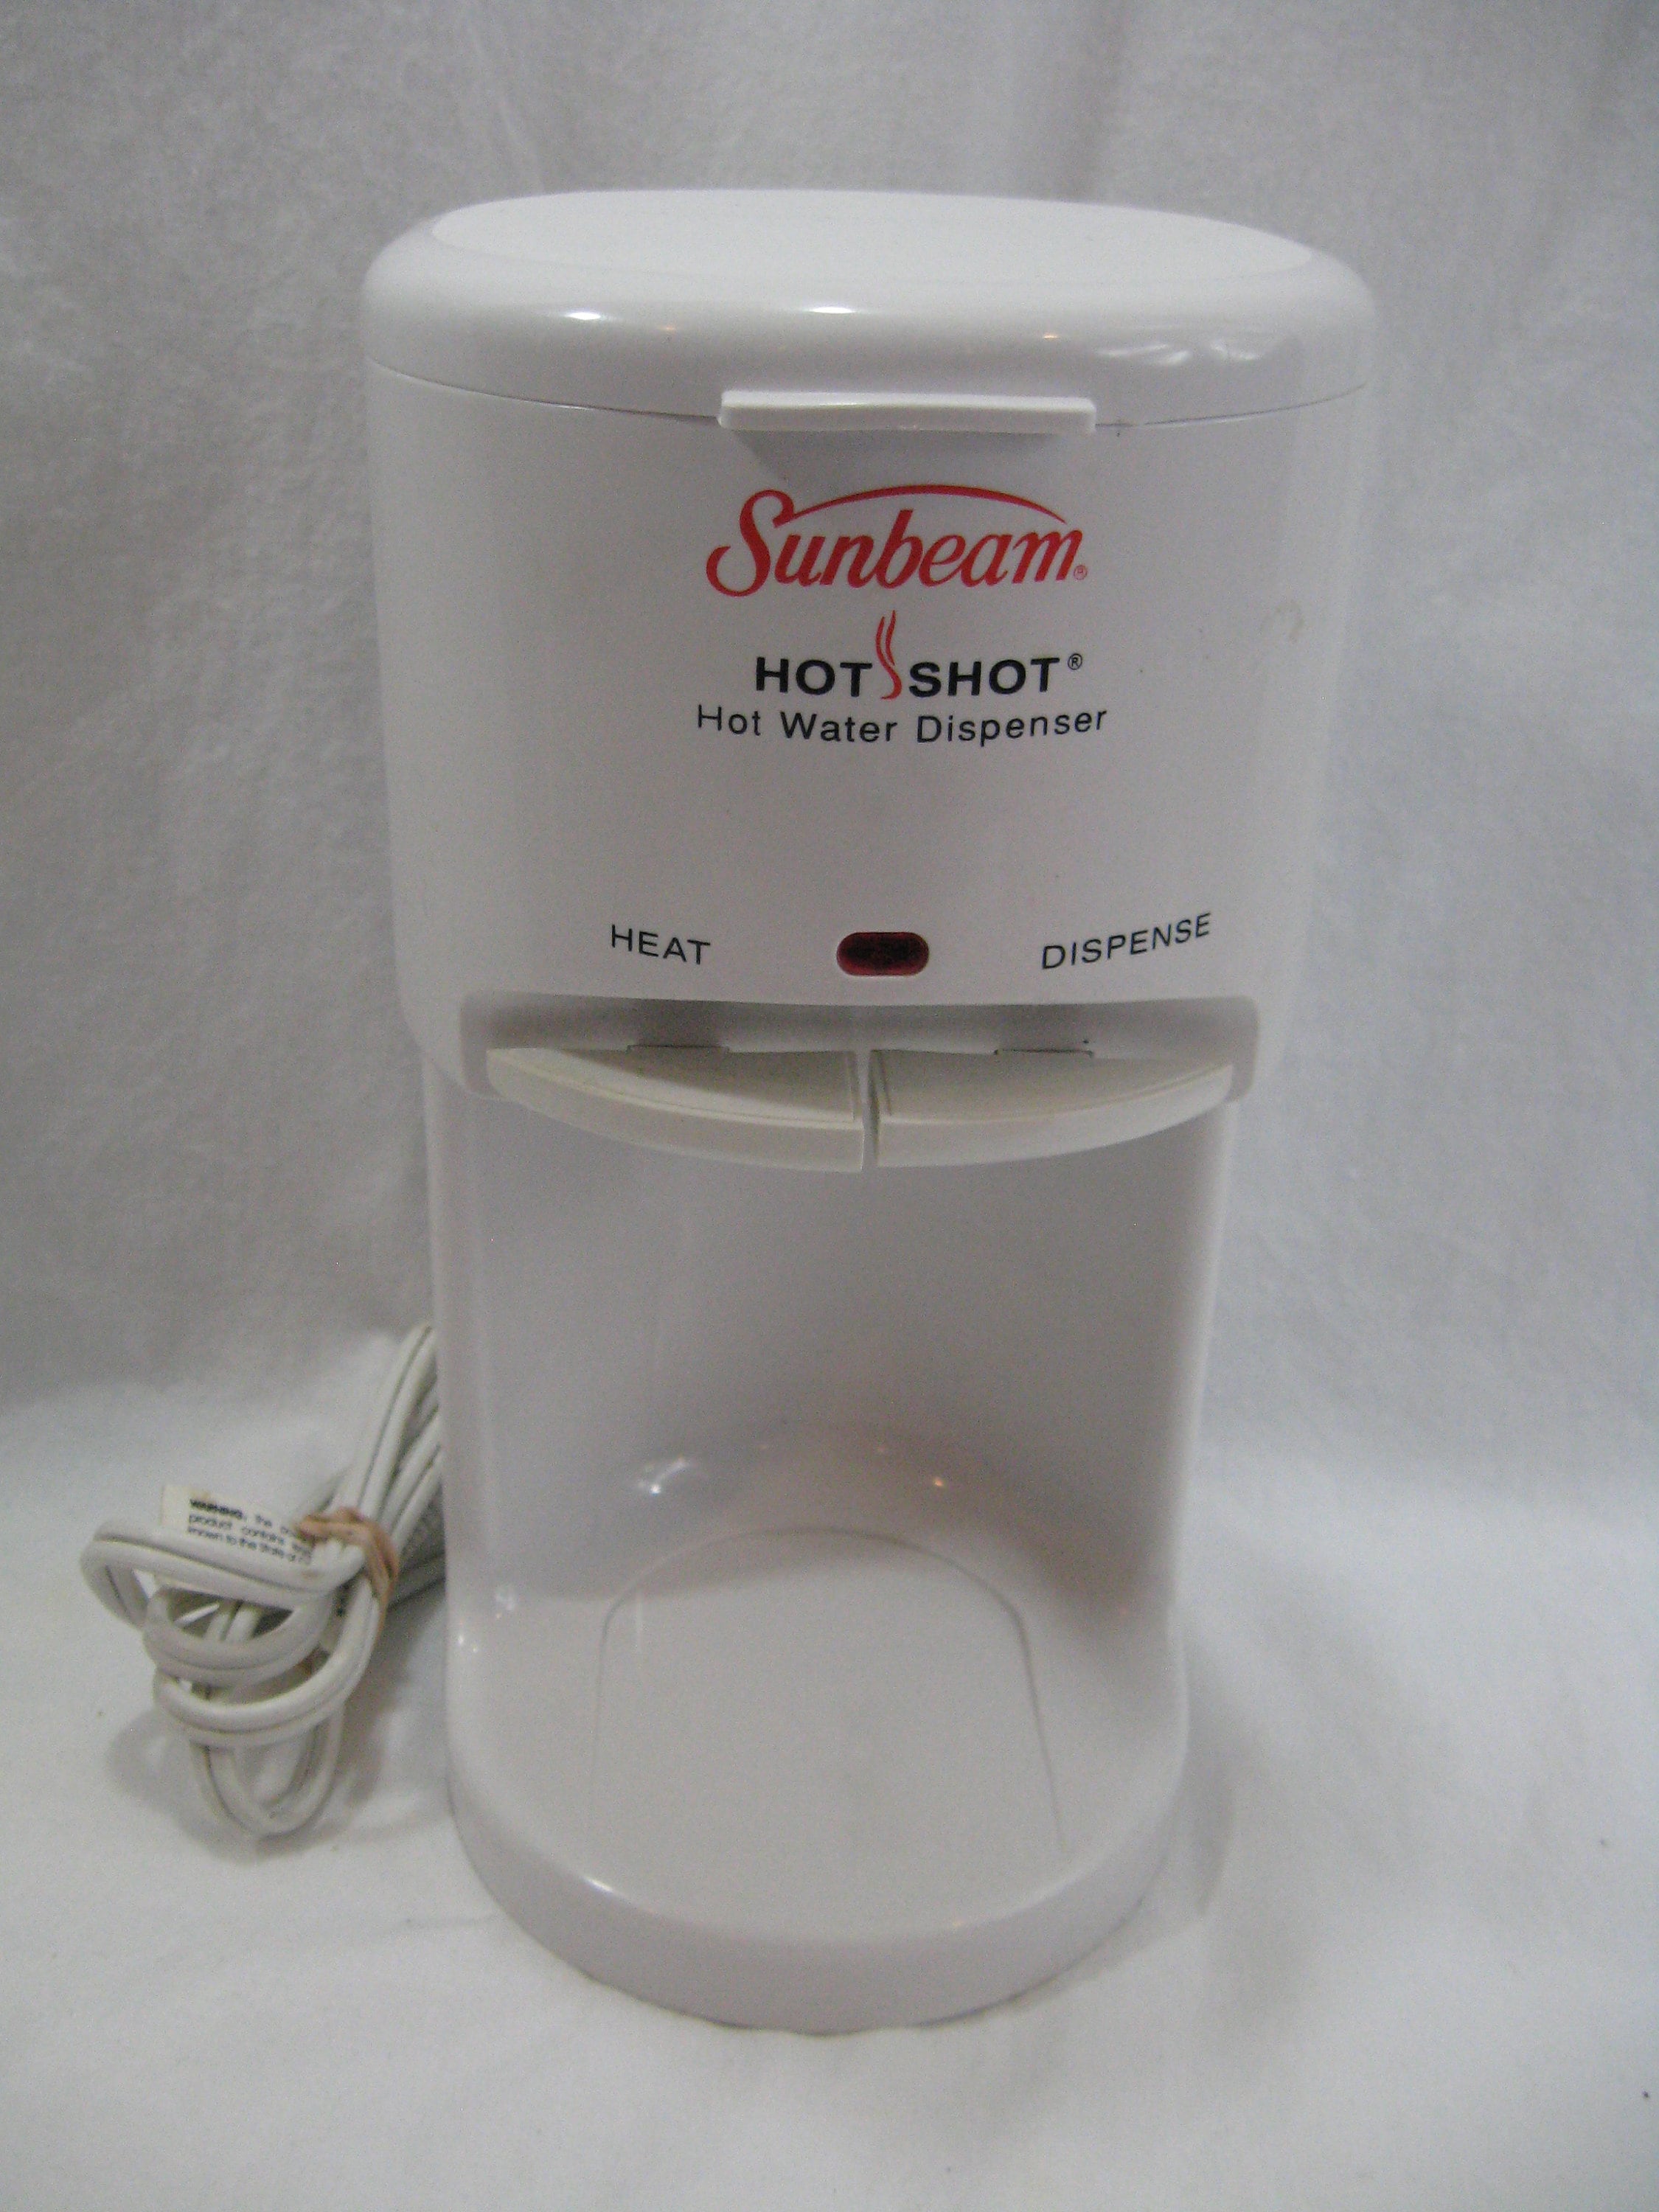 Vintage Sunbeam Hot Shot Hot Water Dispenser 16 Oz With Cup 3211